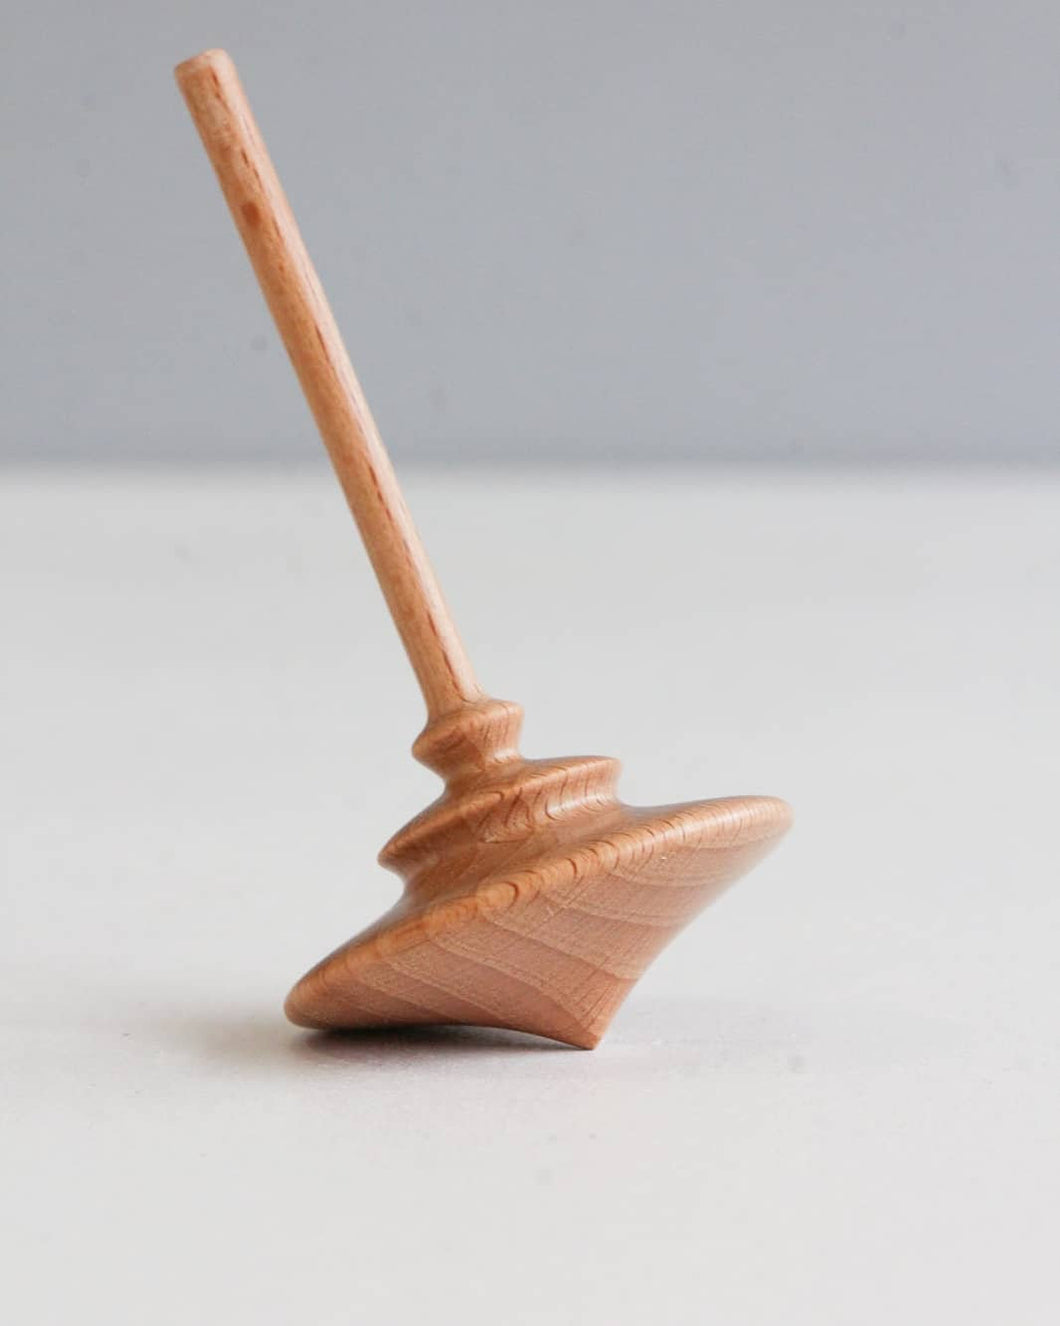 Handmade Wooden Spinning Top